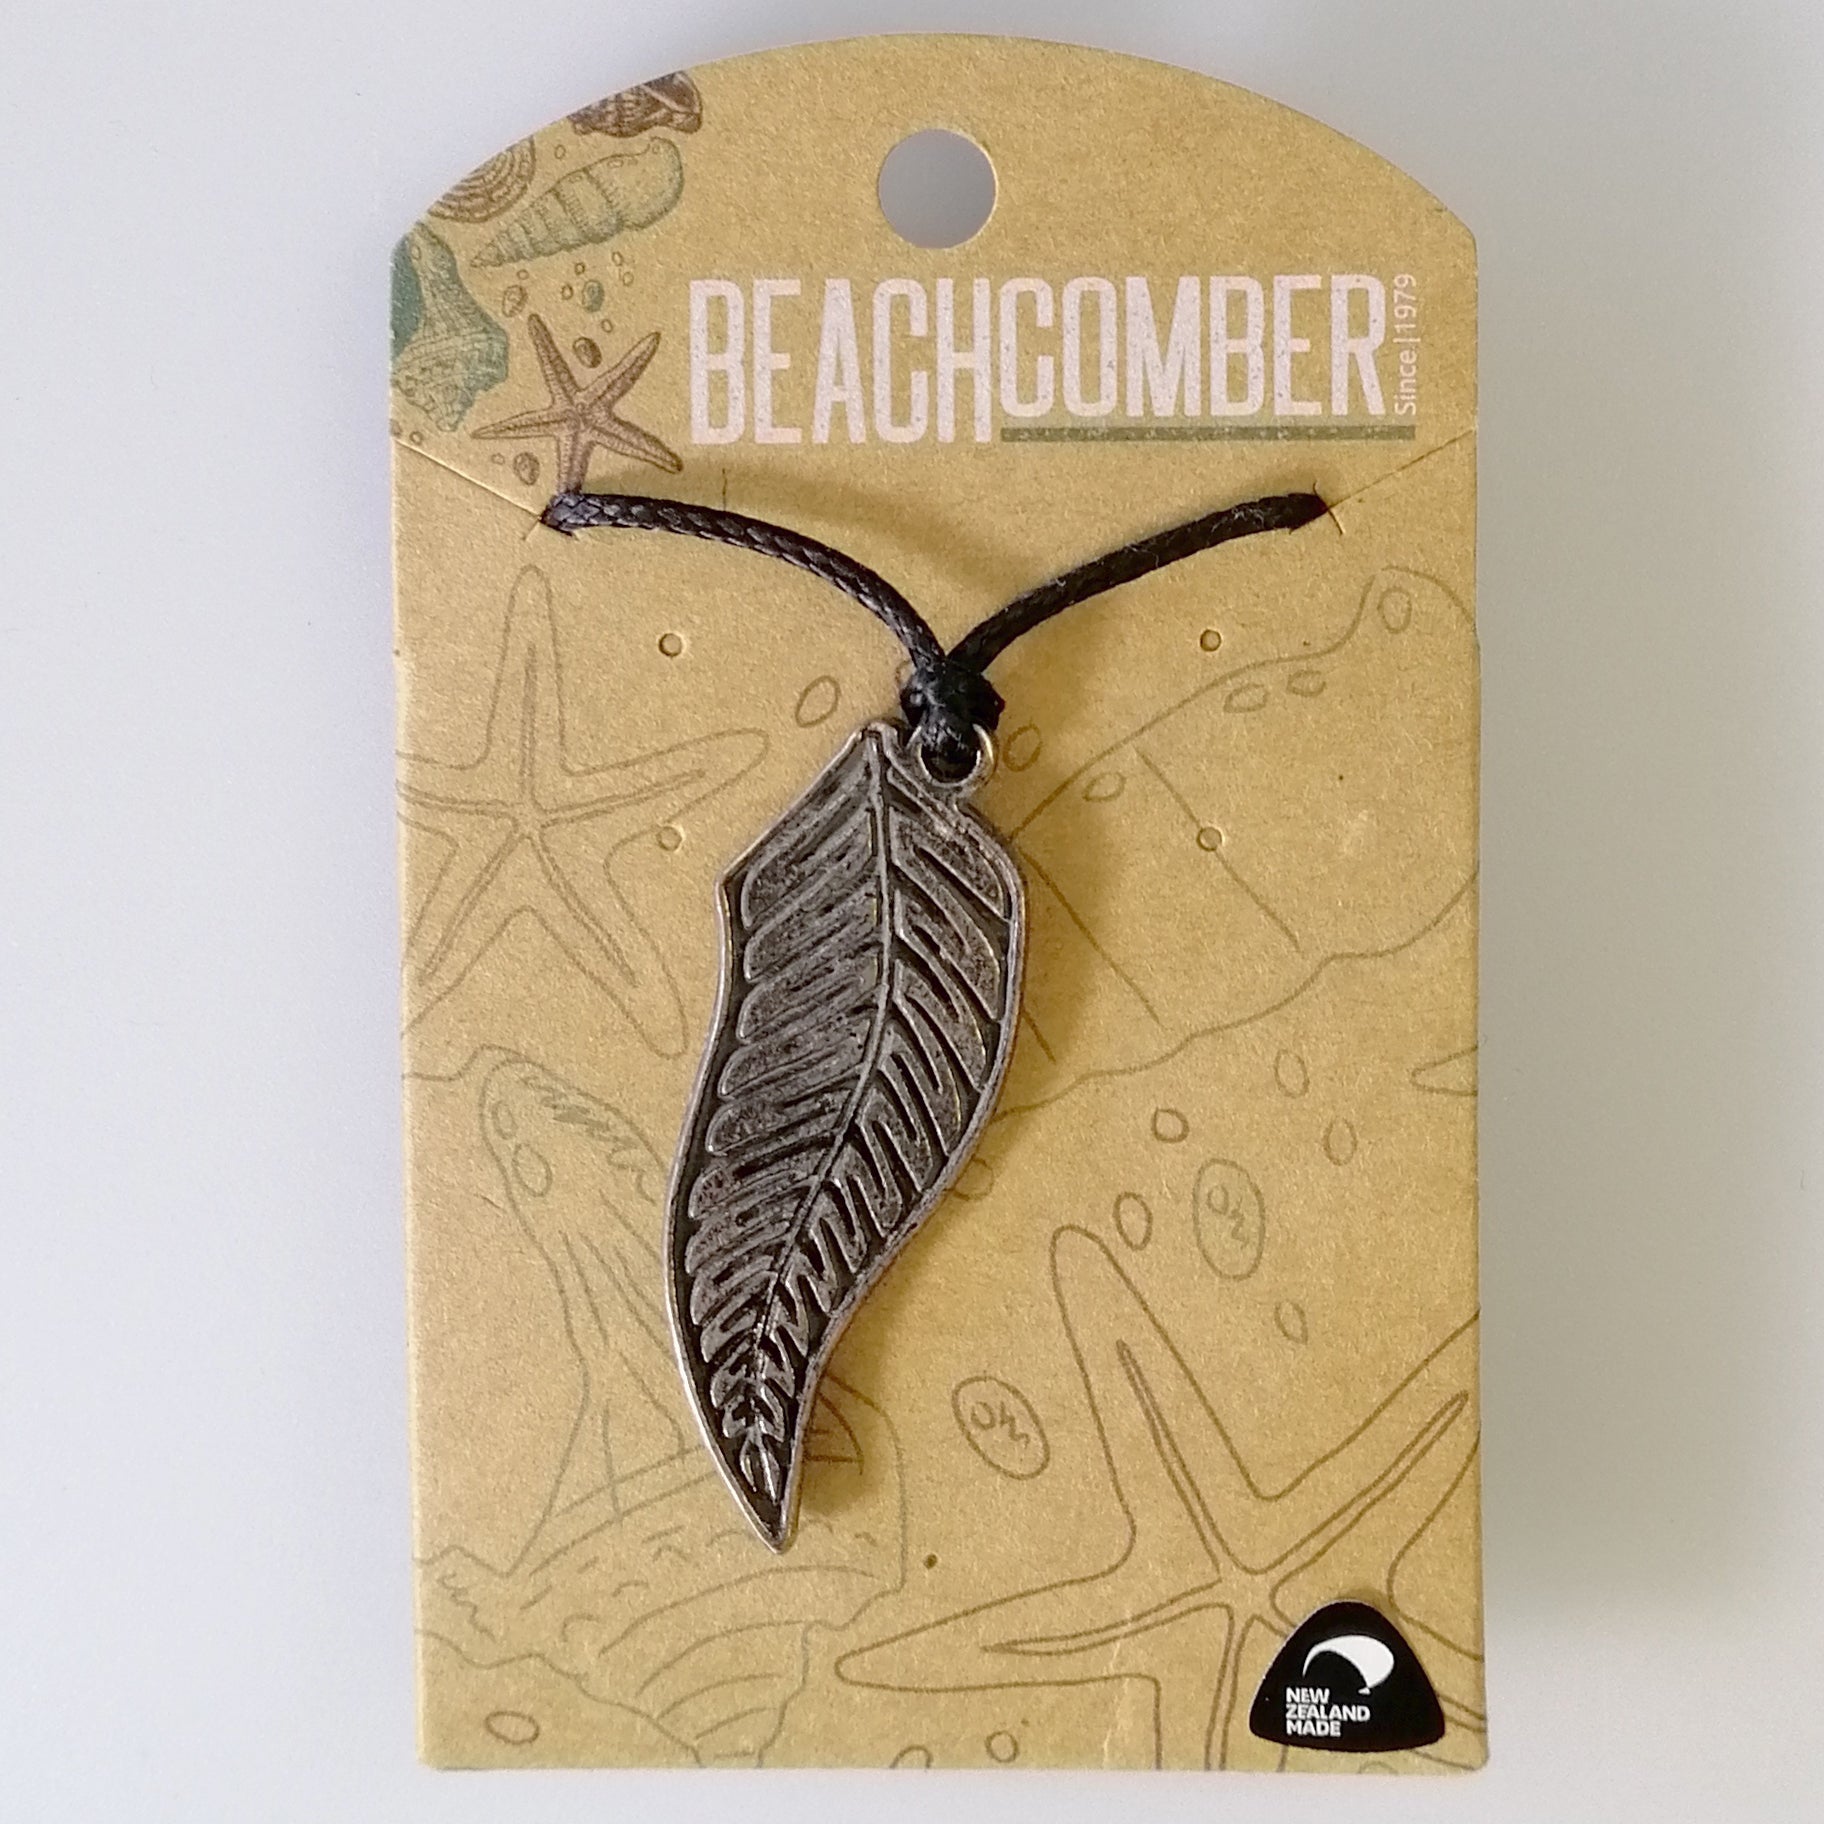 Beachcomber - Pewter Fern Necklace